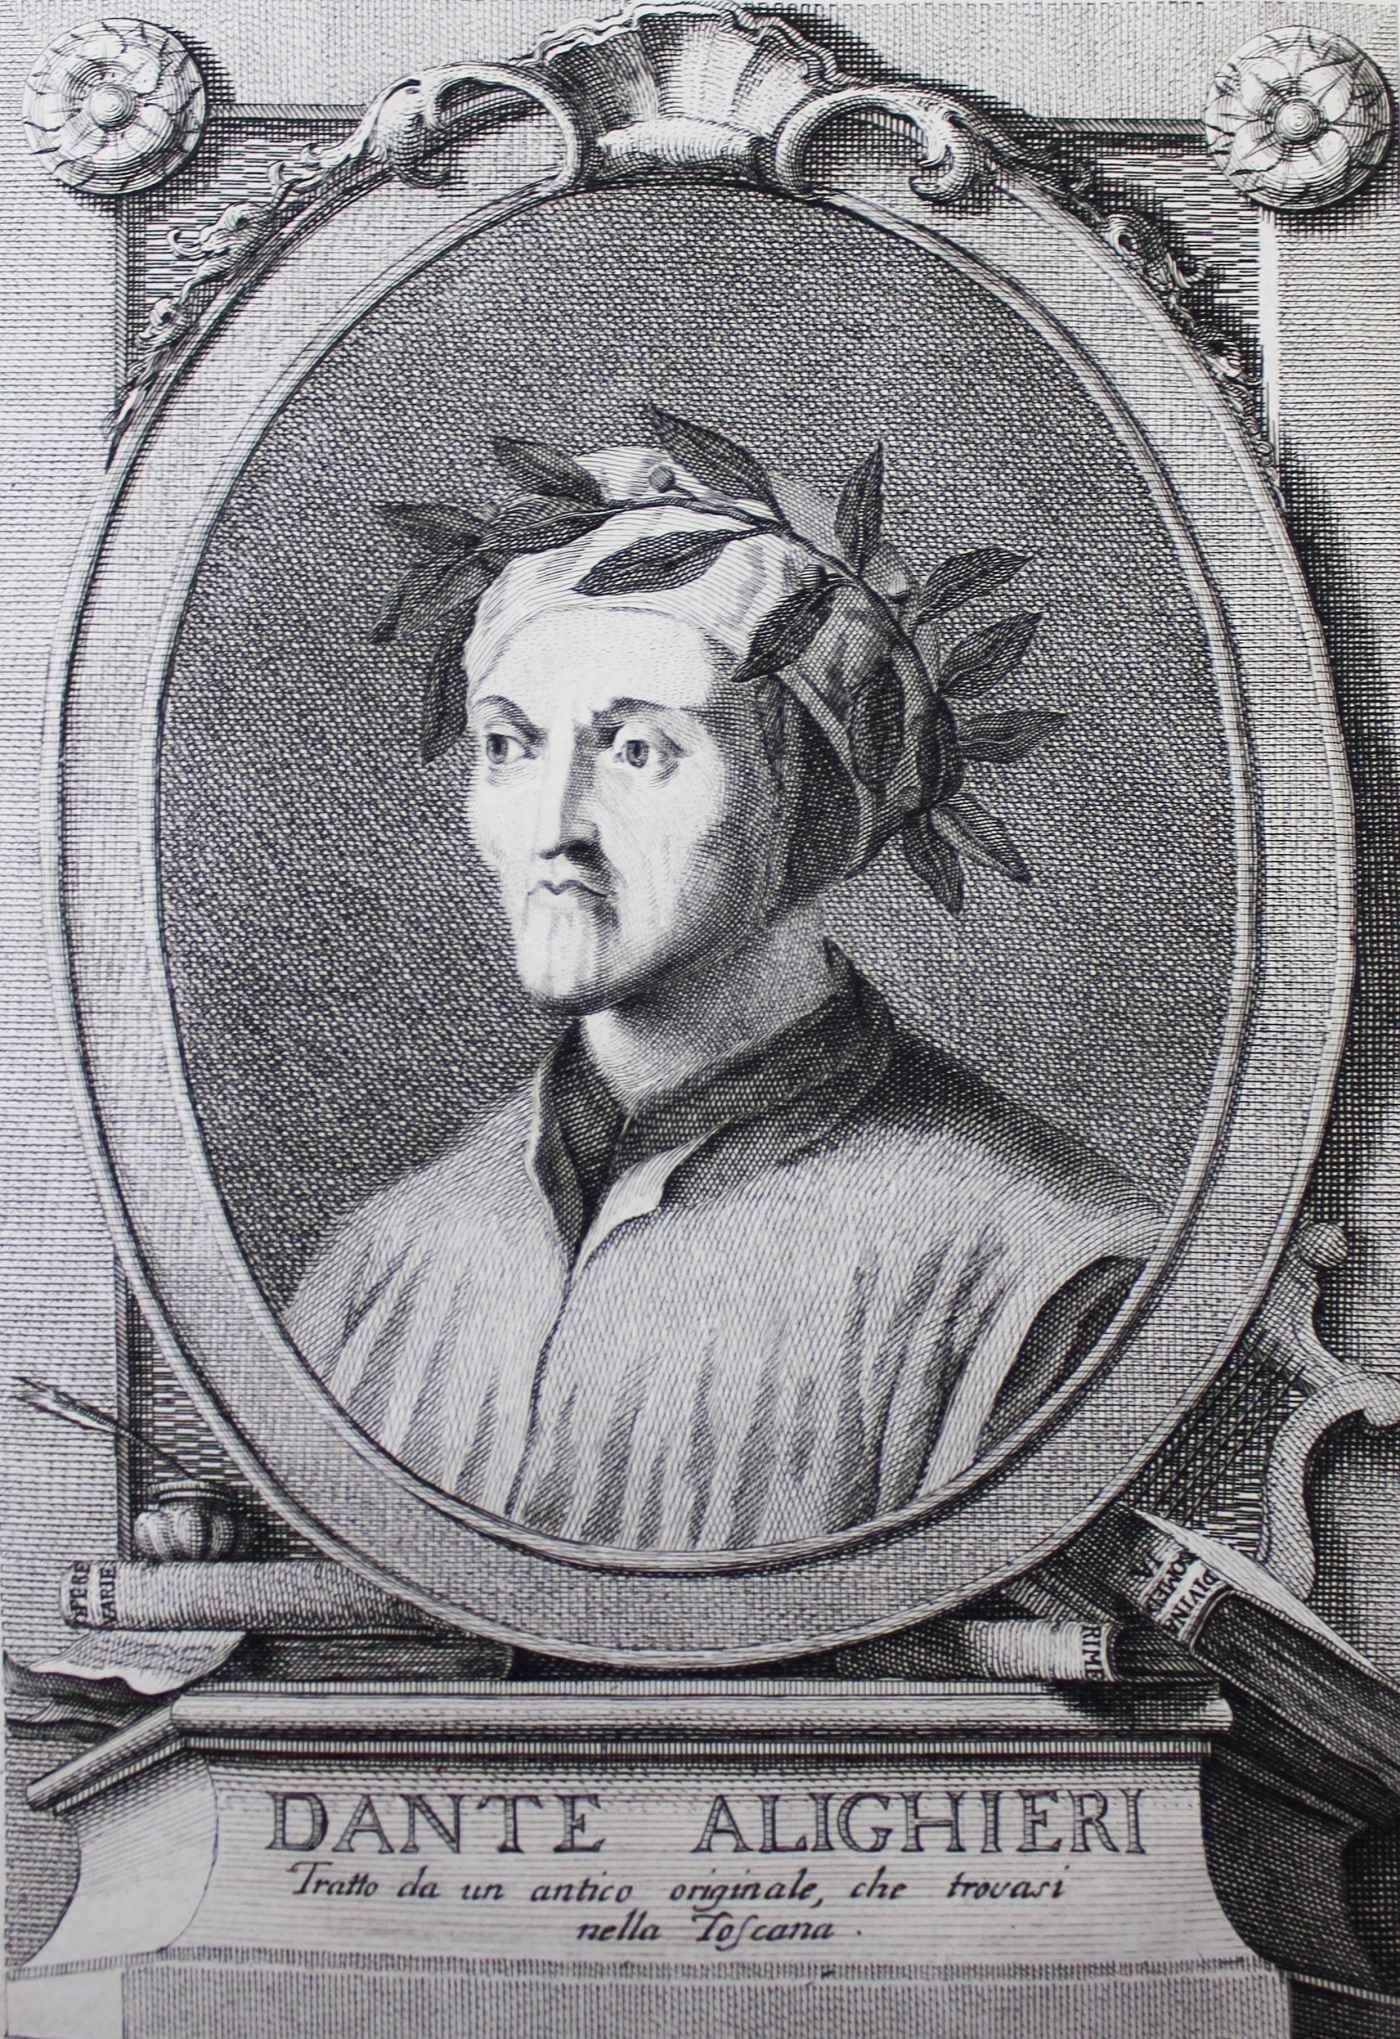 An illustration of the Italian poet Dante Alighieri (1265-1321).